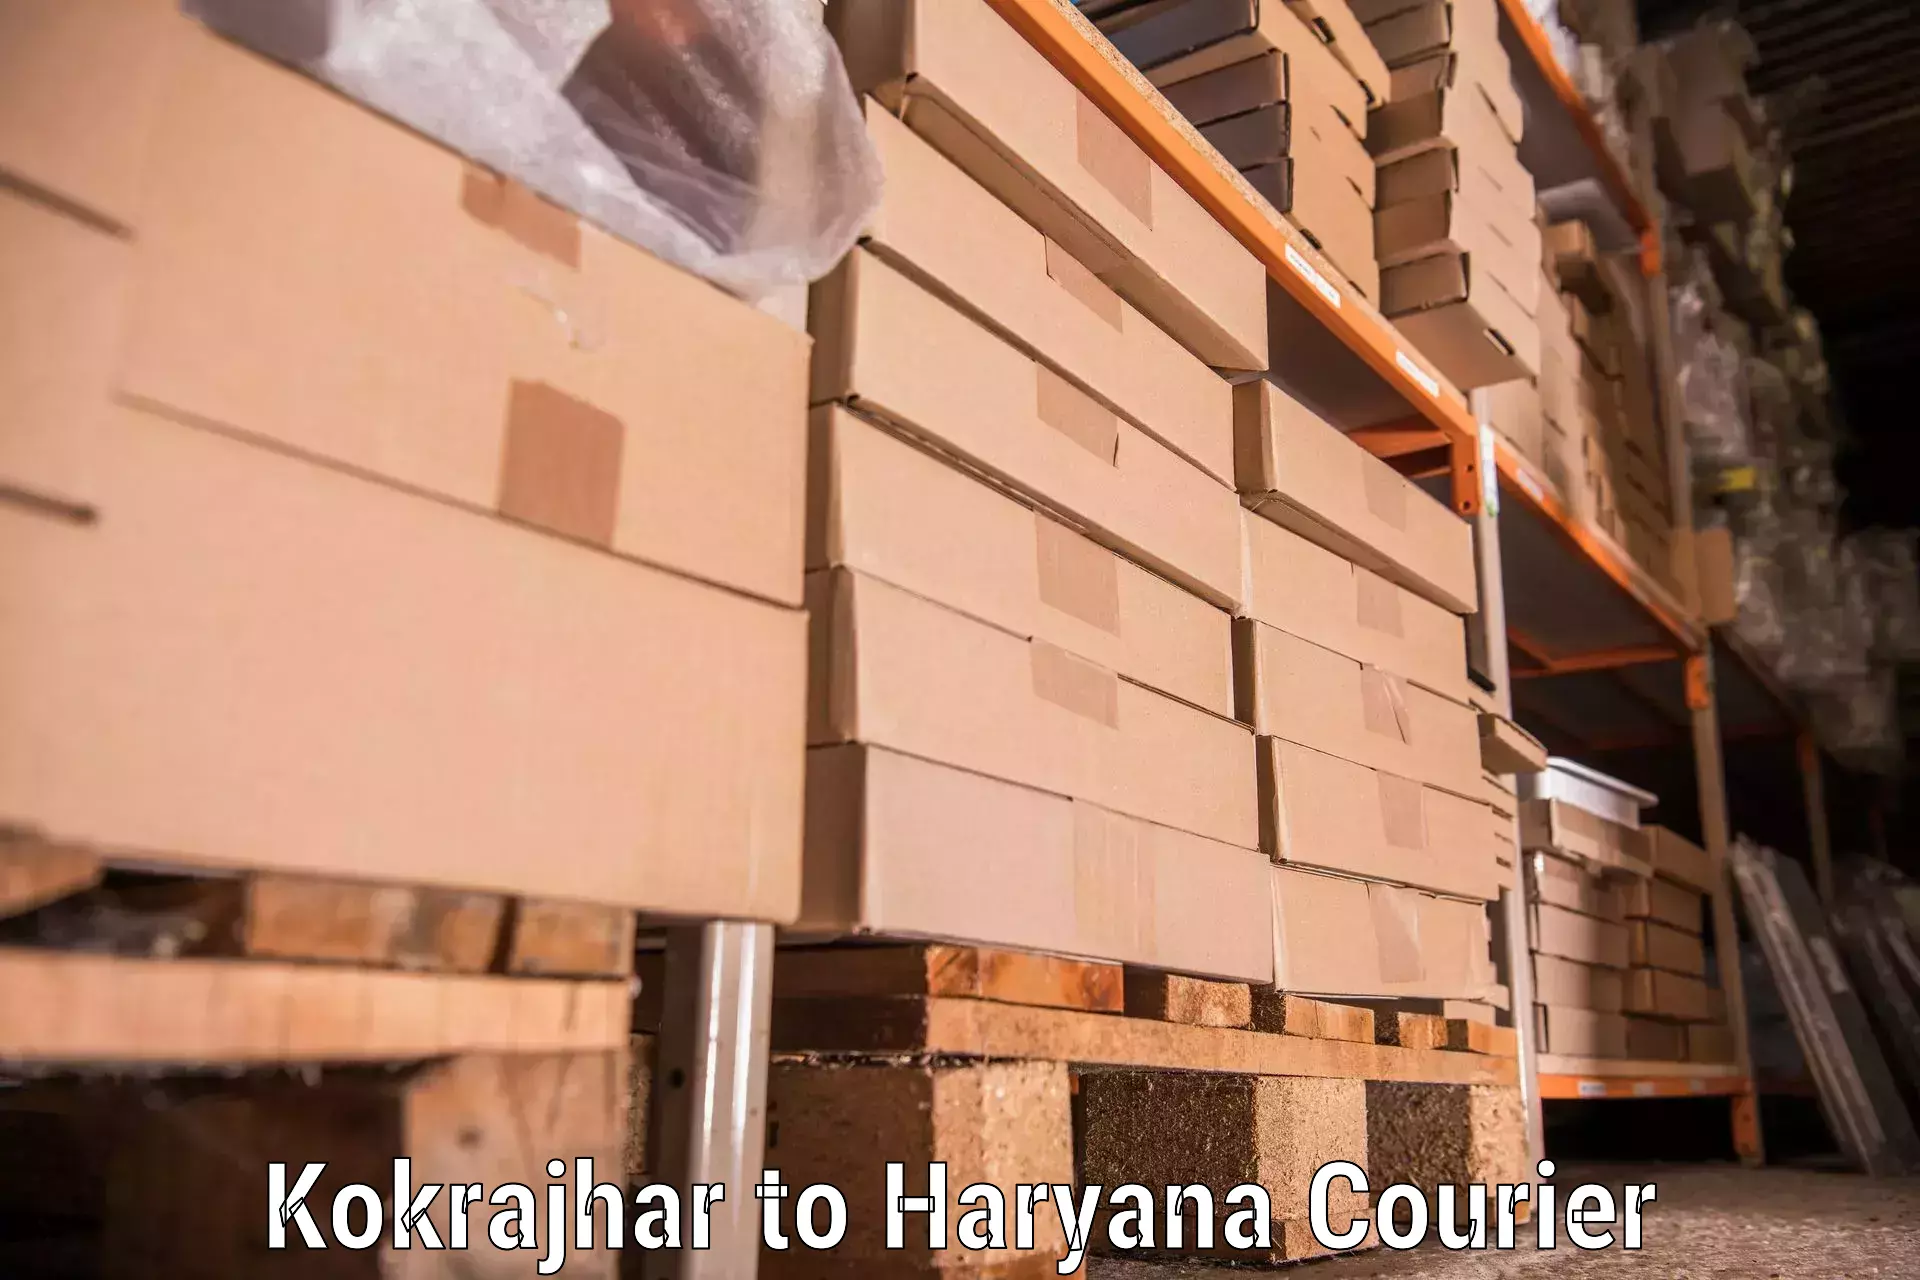 Professional moving company Kokrajhar to Hodal